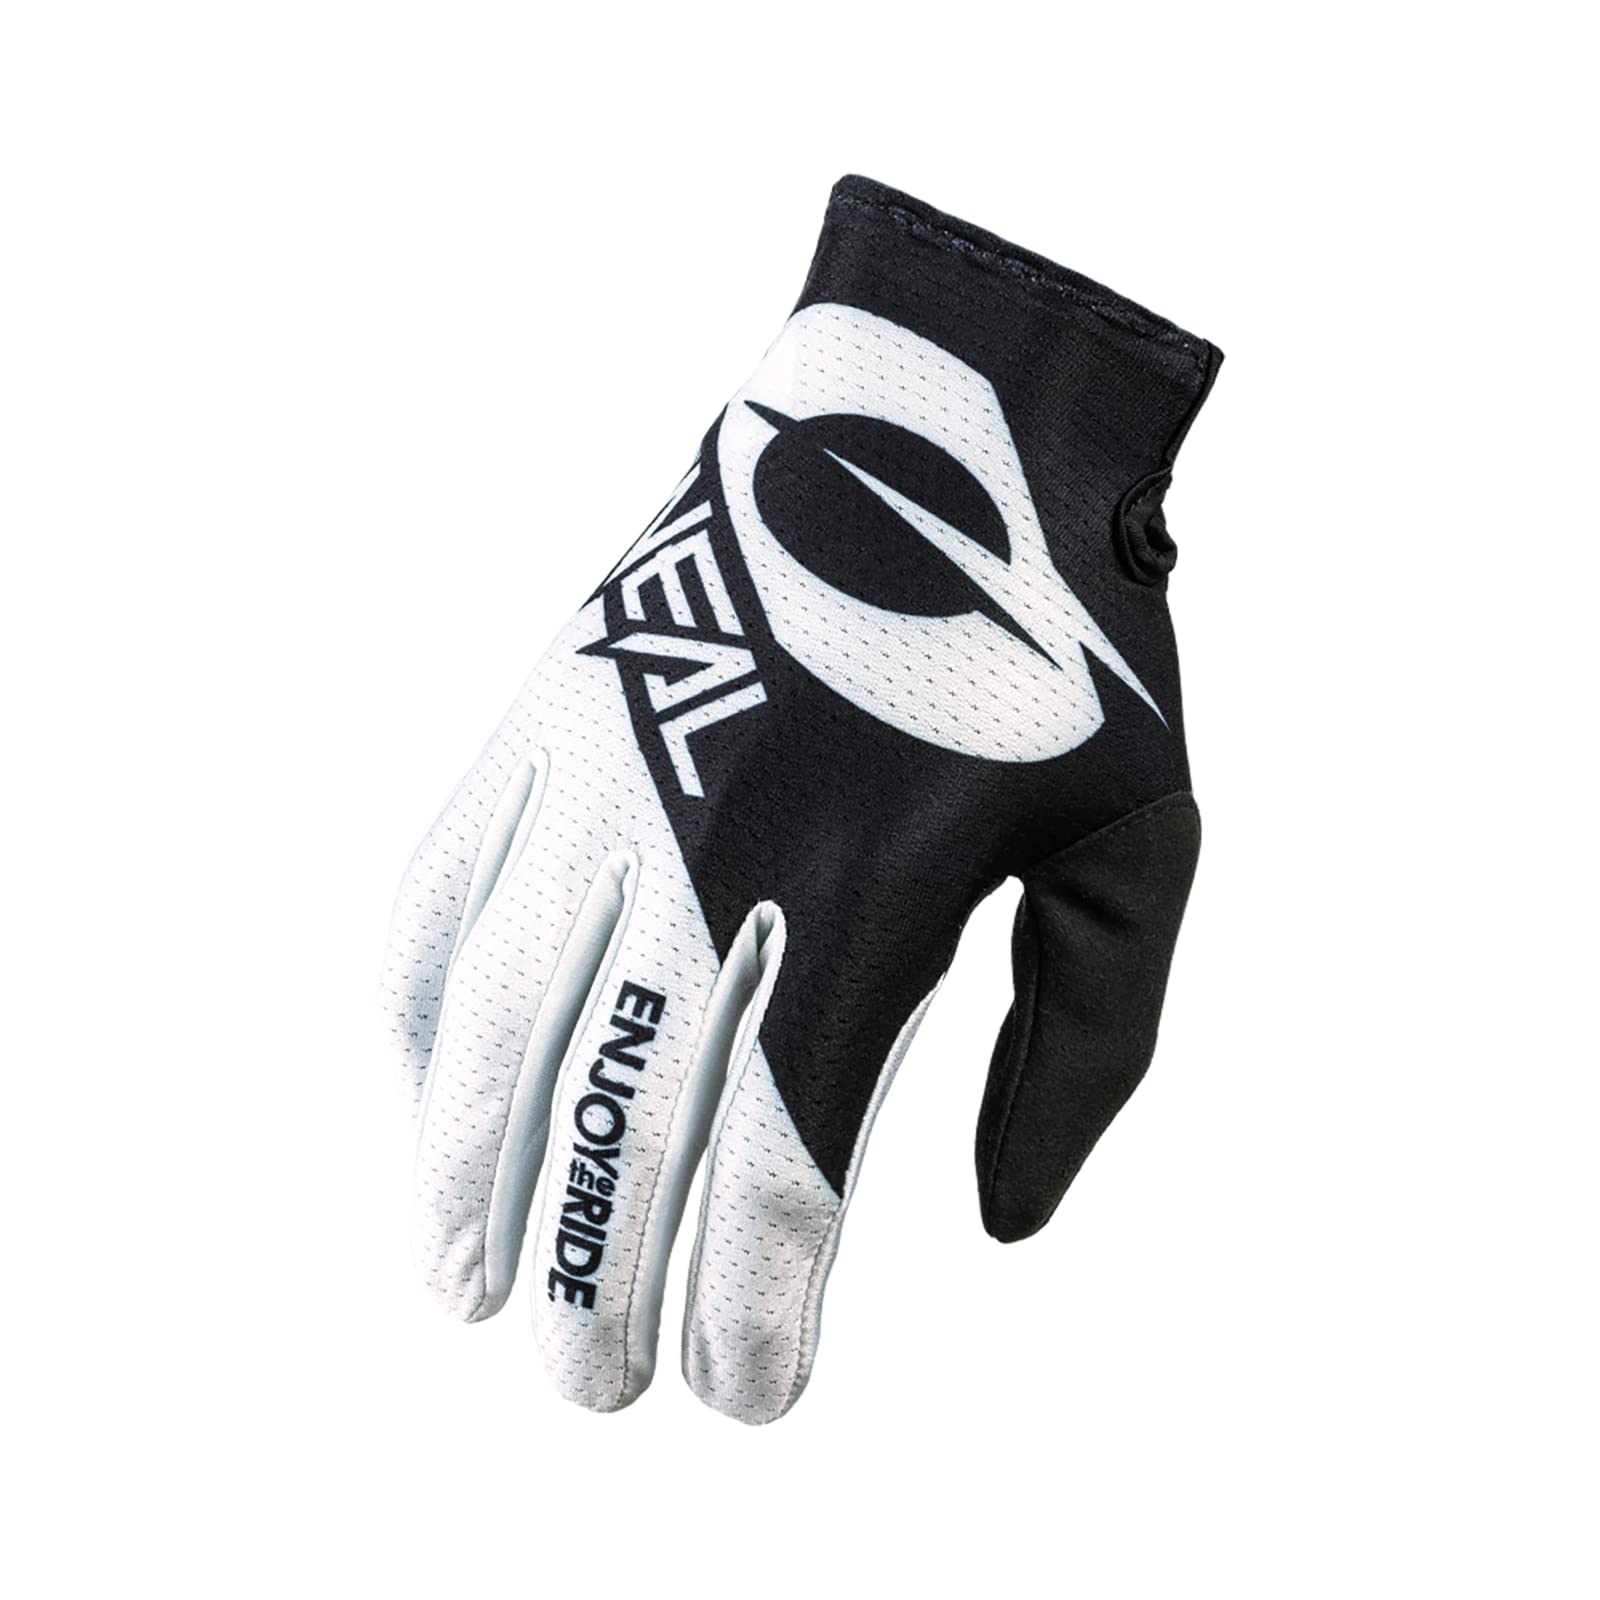 O'NEAL | Fahrrad- & Motocross-Handschuhe | MX MTB DH FR Downhill Freeride | Langlebige, Flexible Materialien, belüftete Handoberseite | Matrix Glove | Erwachsene | Schwarz Weiß | Größe L von O'NEAL